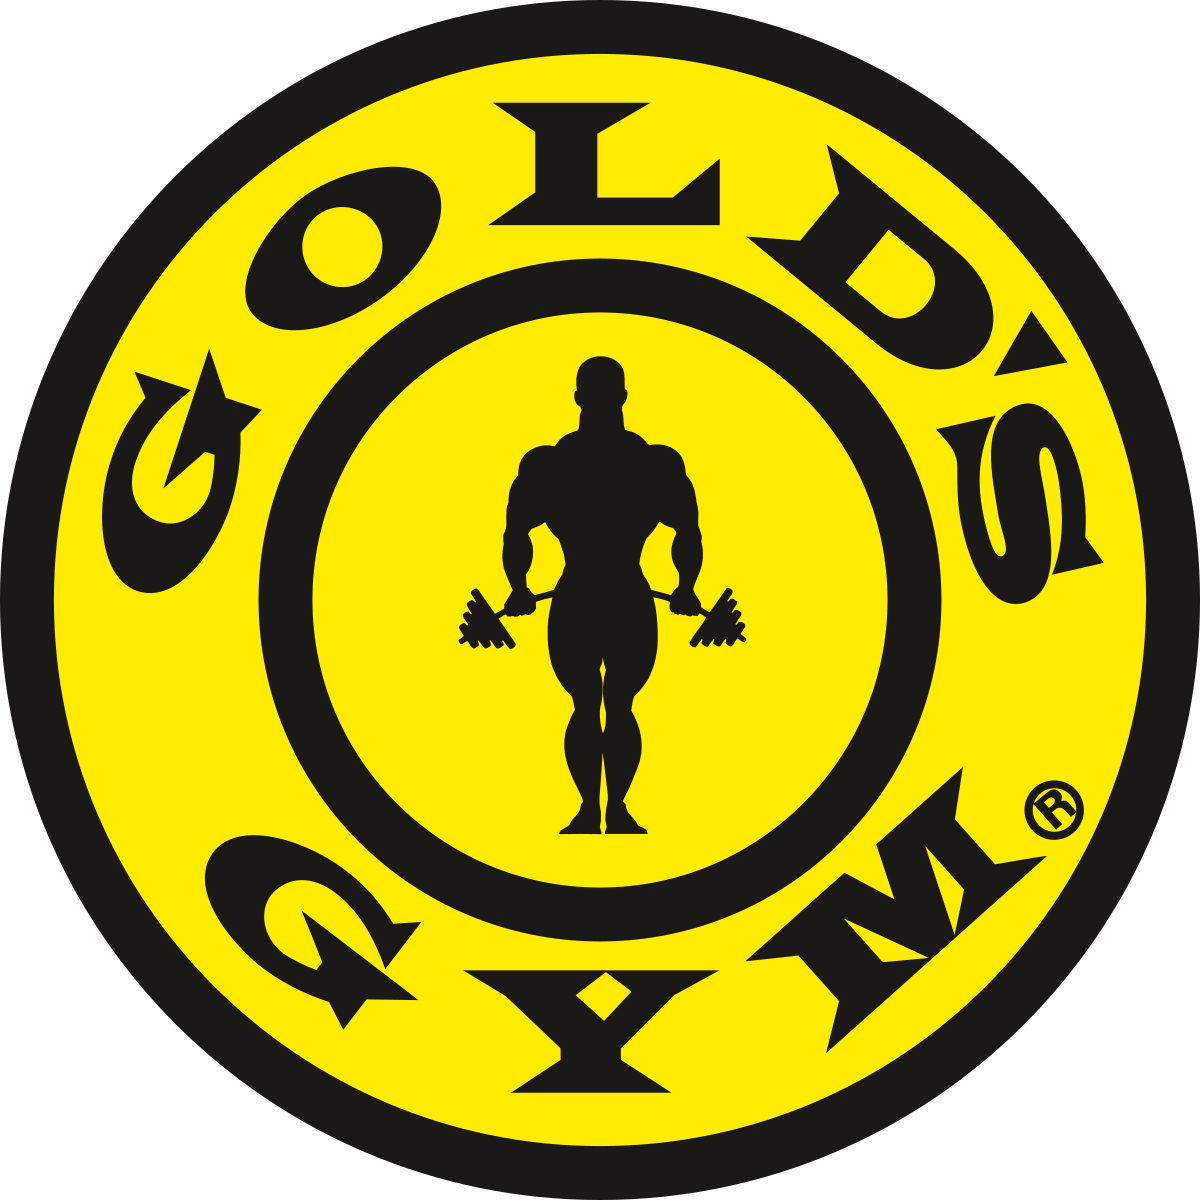 Gold S Gym Wikipedia